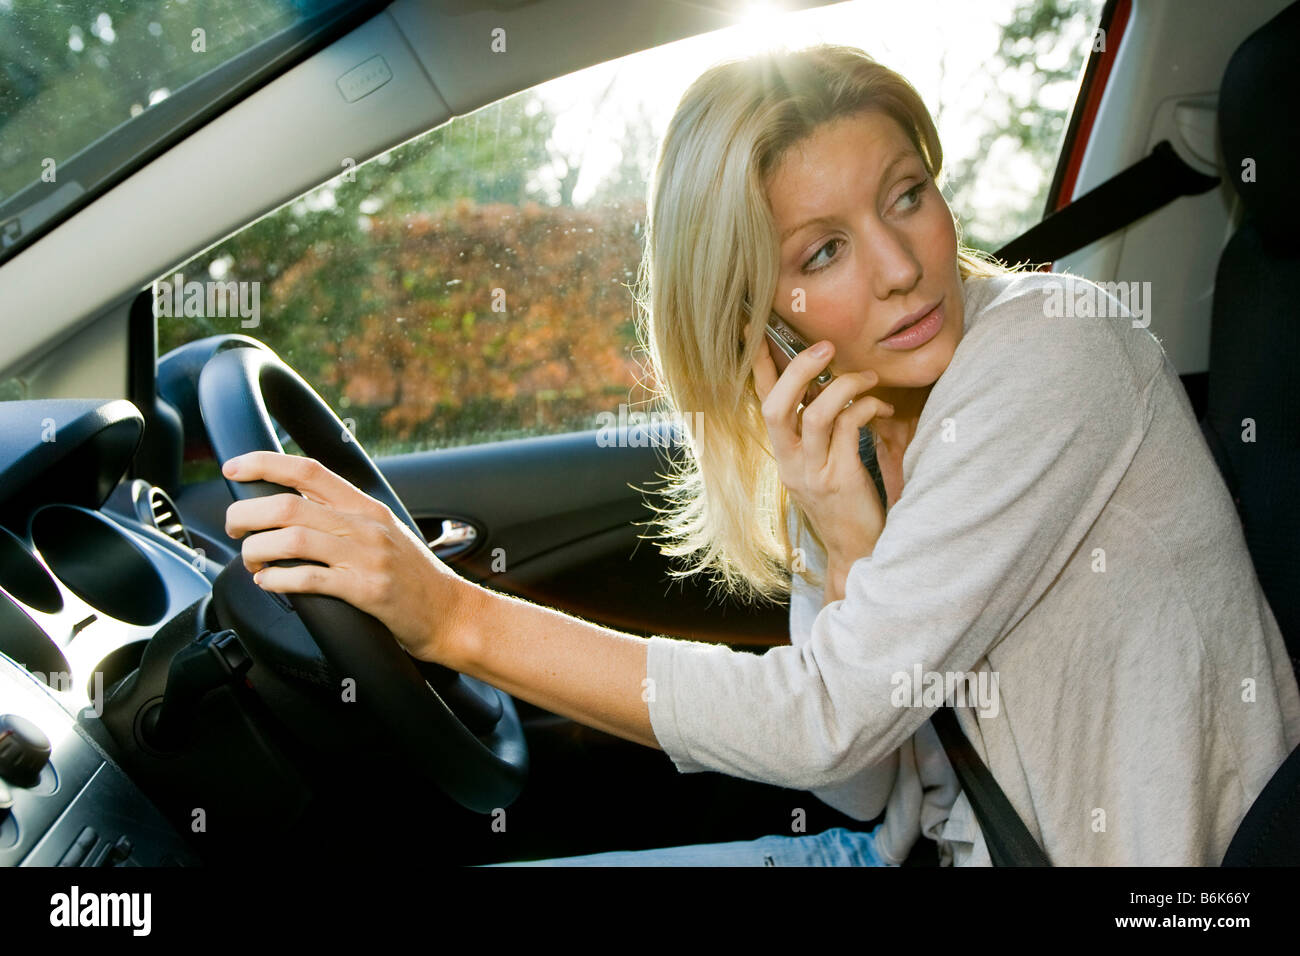 Woman talking on phone in car Stock Photo